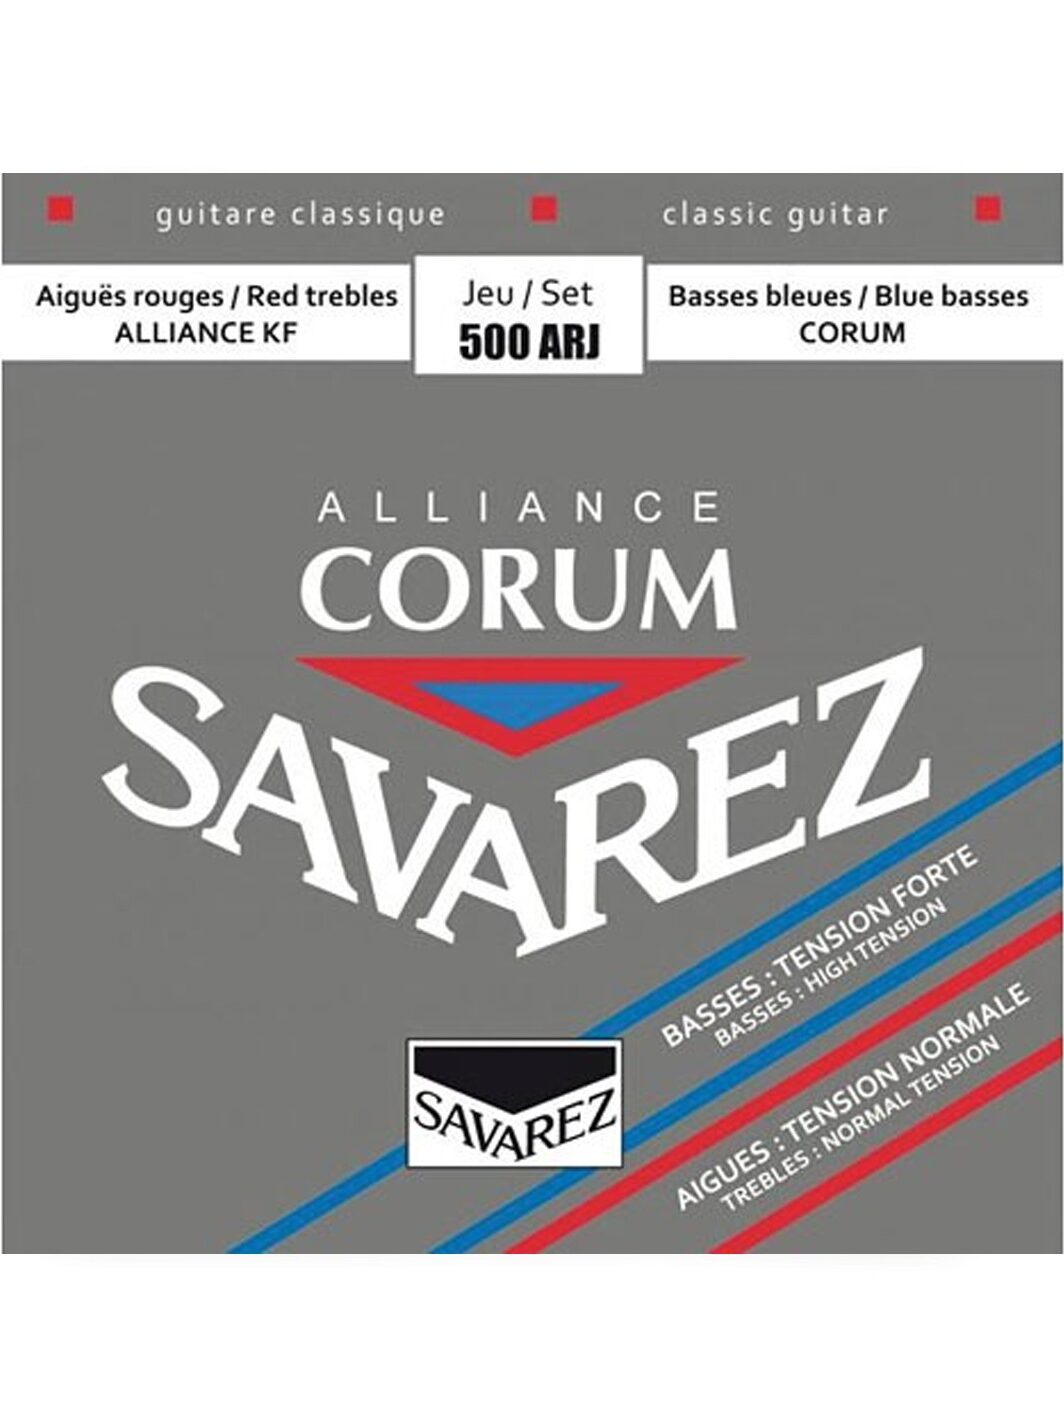 Savarez Corum Alliance 500 ARJ Chitarra Classica